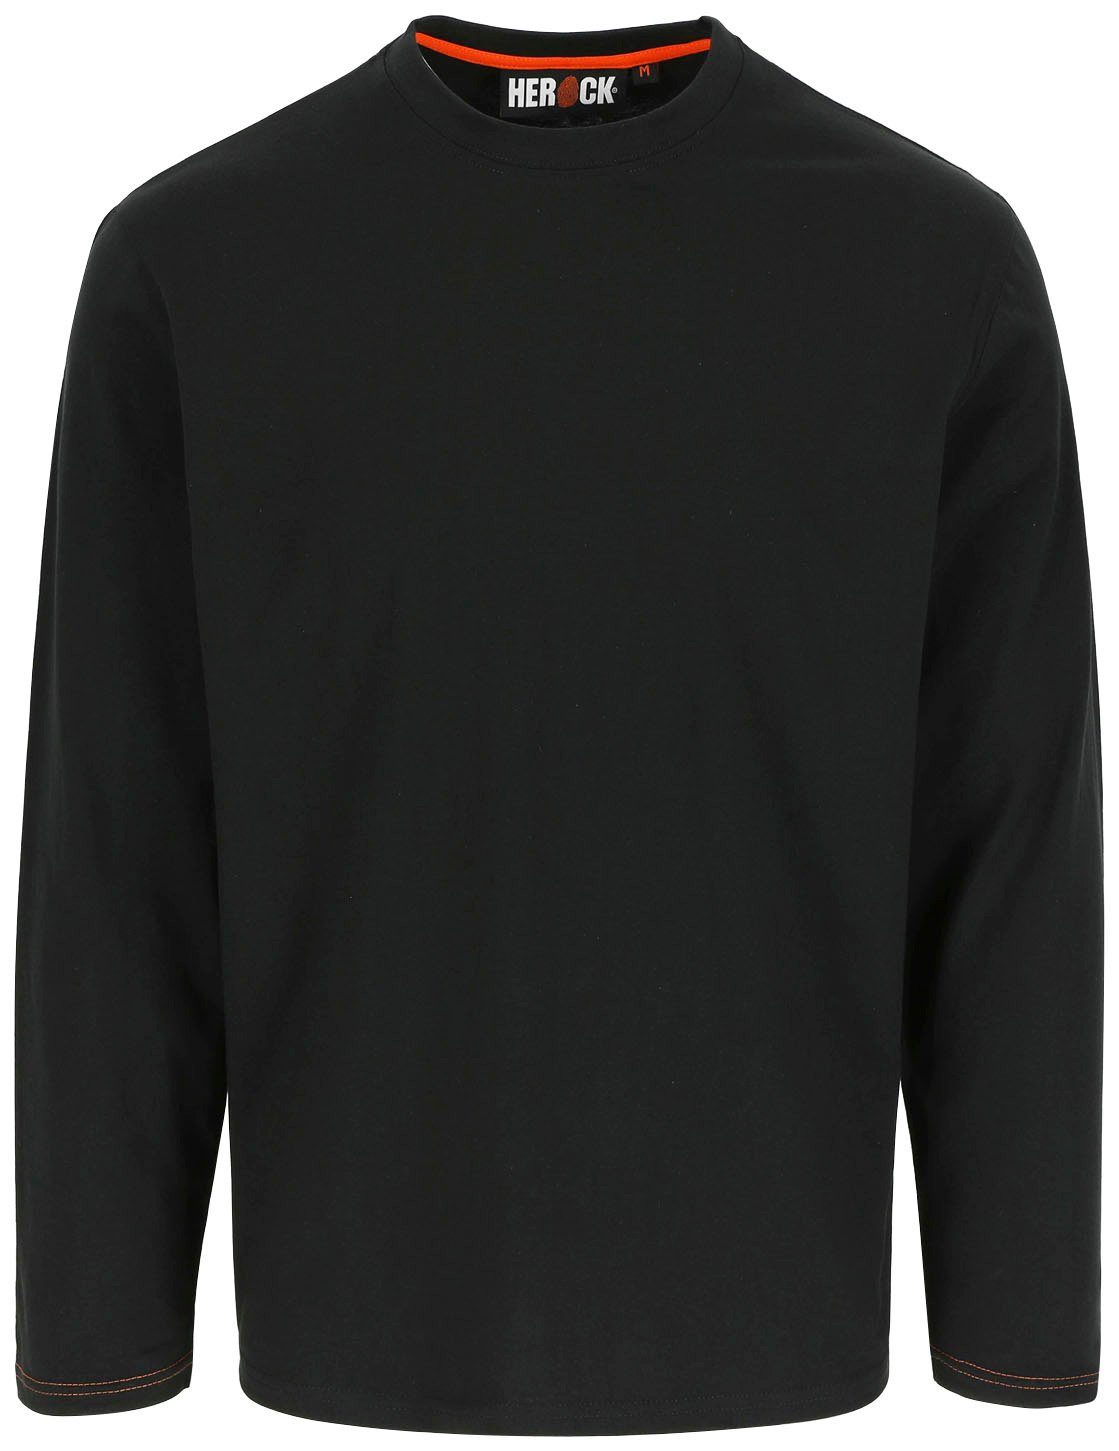 Herock Langarmshirt Noet t-shirt langärmlig 100 % vorgeschrumpfte Baumwolle, angenehmes Tragegefühl, Basic schwarz